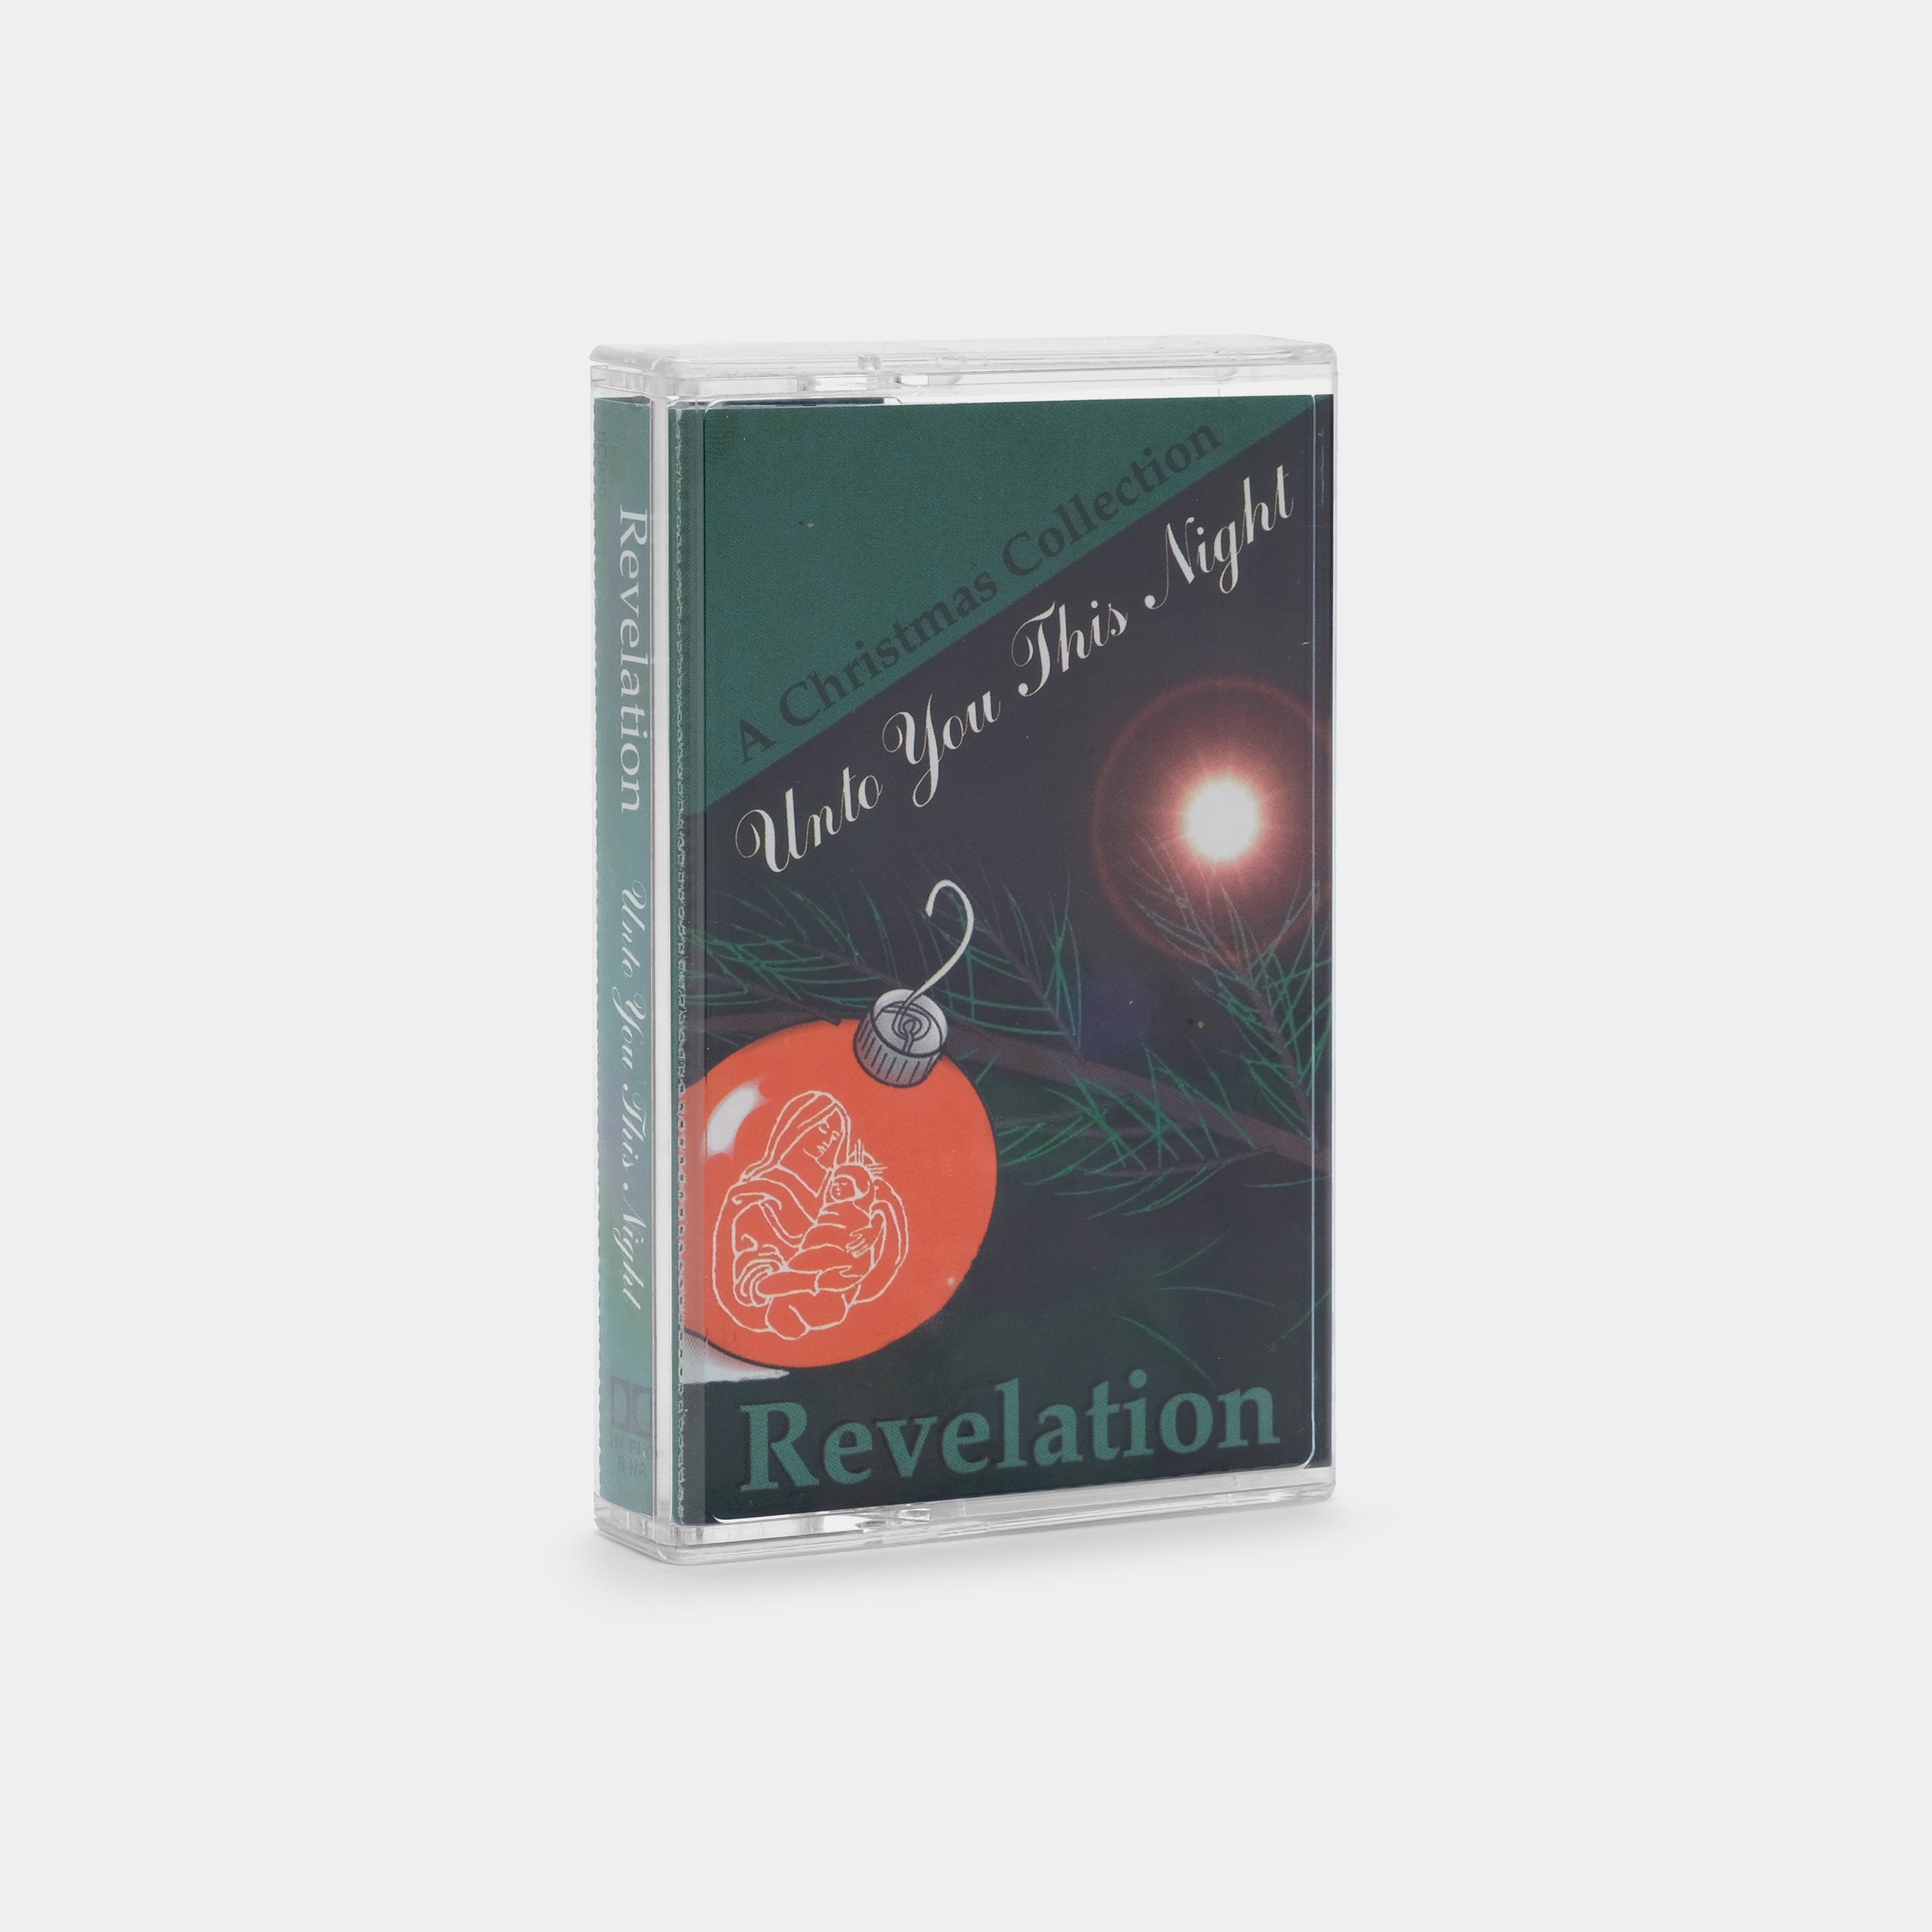 Revelation: Unto You This Night Cassette Tape